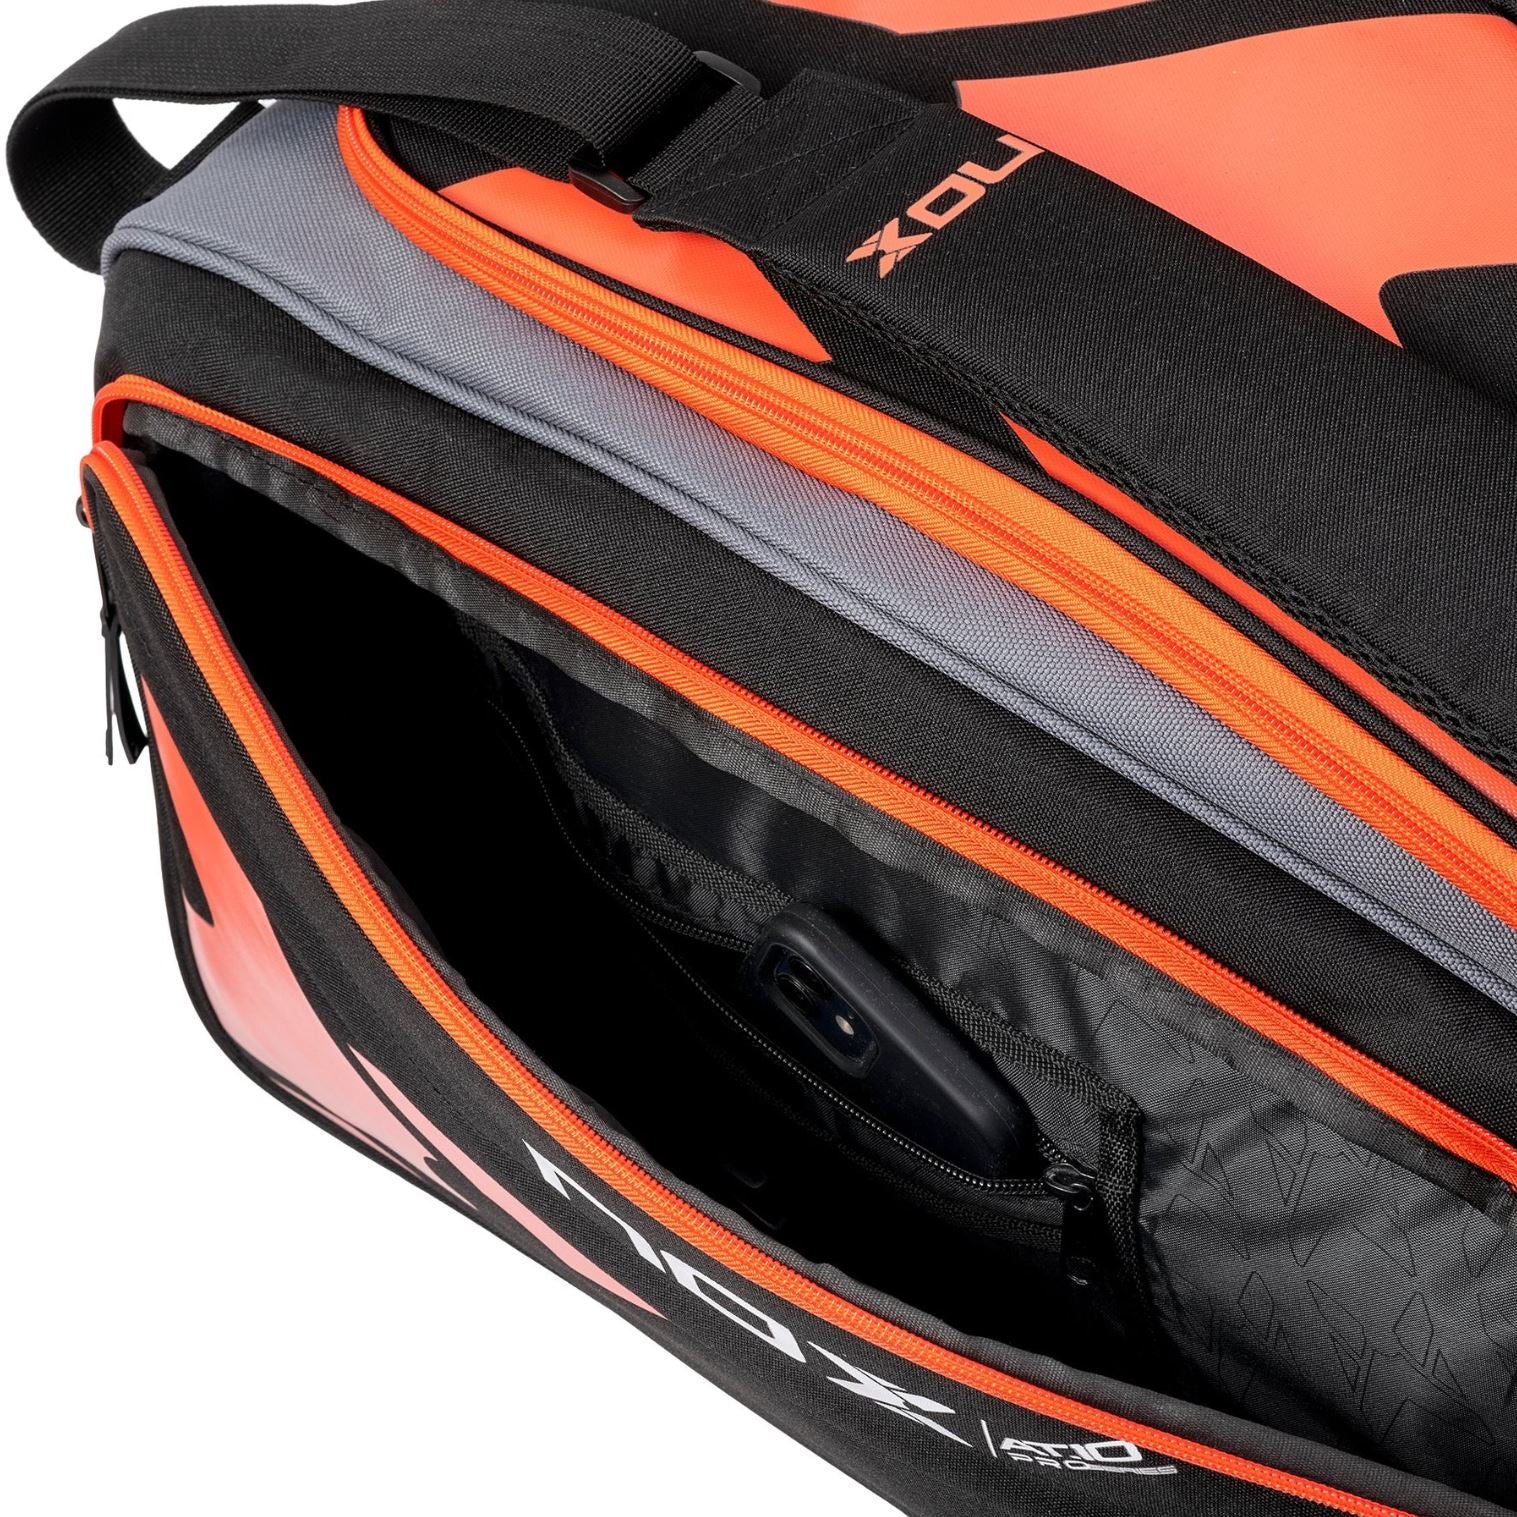 Nox AT10 Competition XL Compact Padel Bag